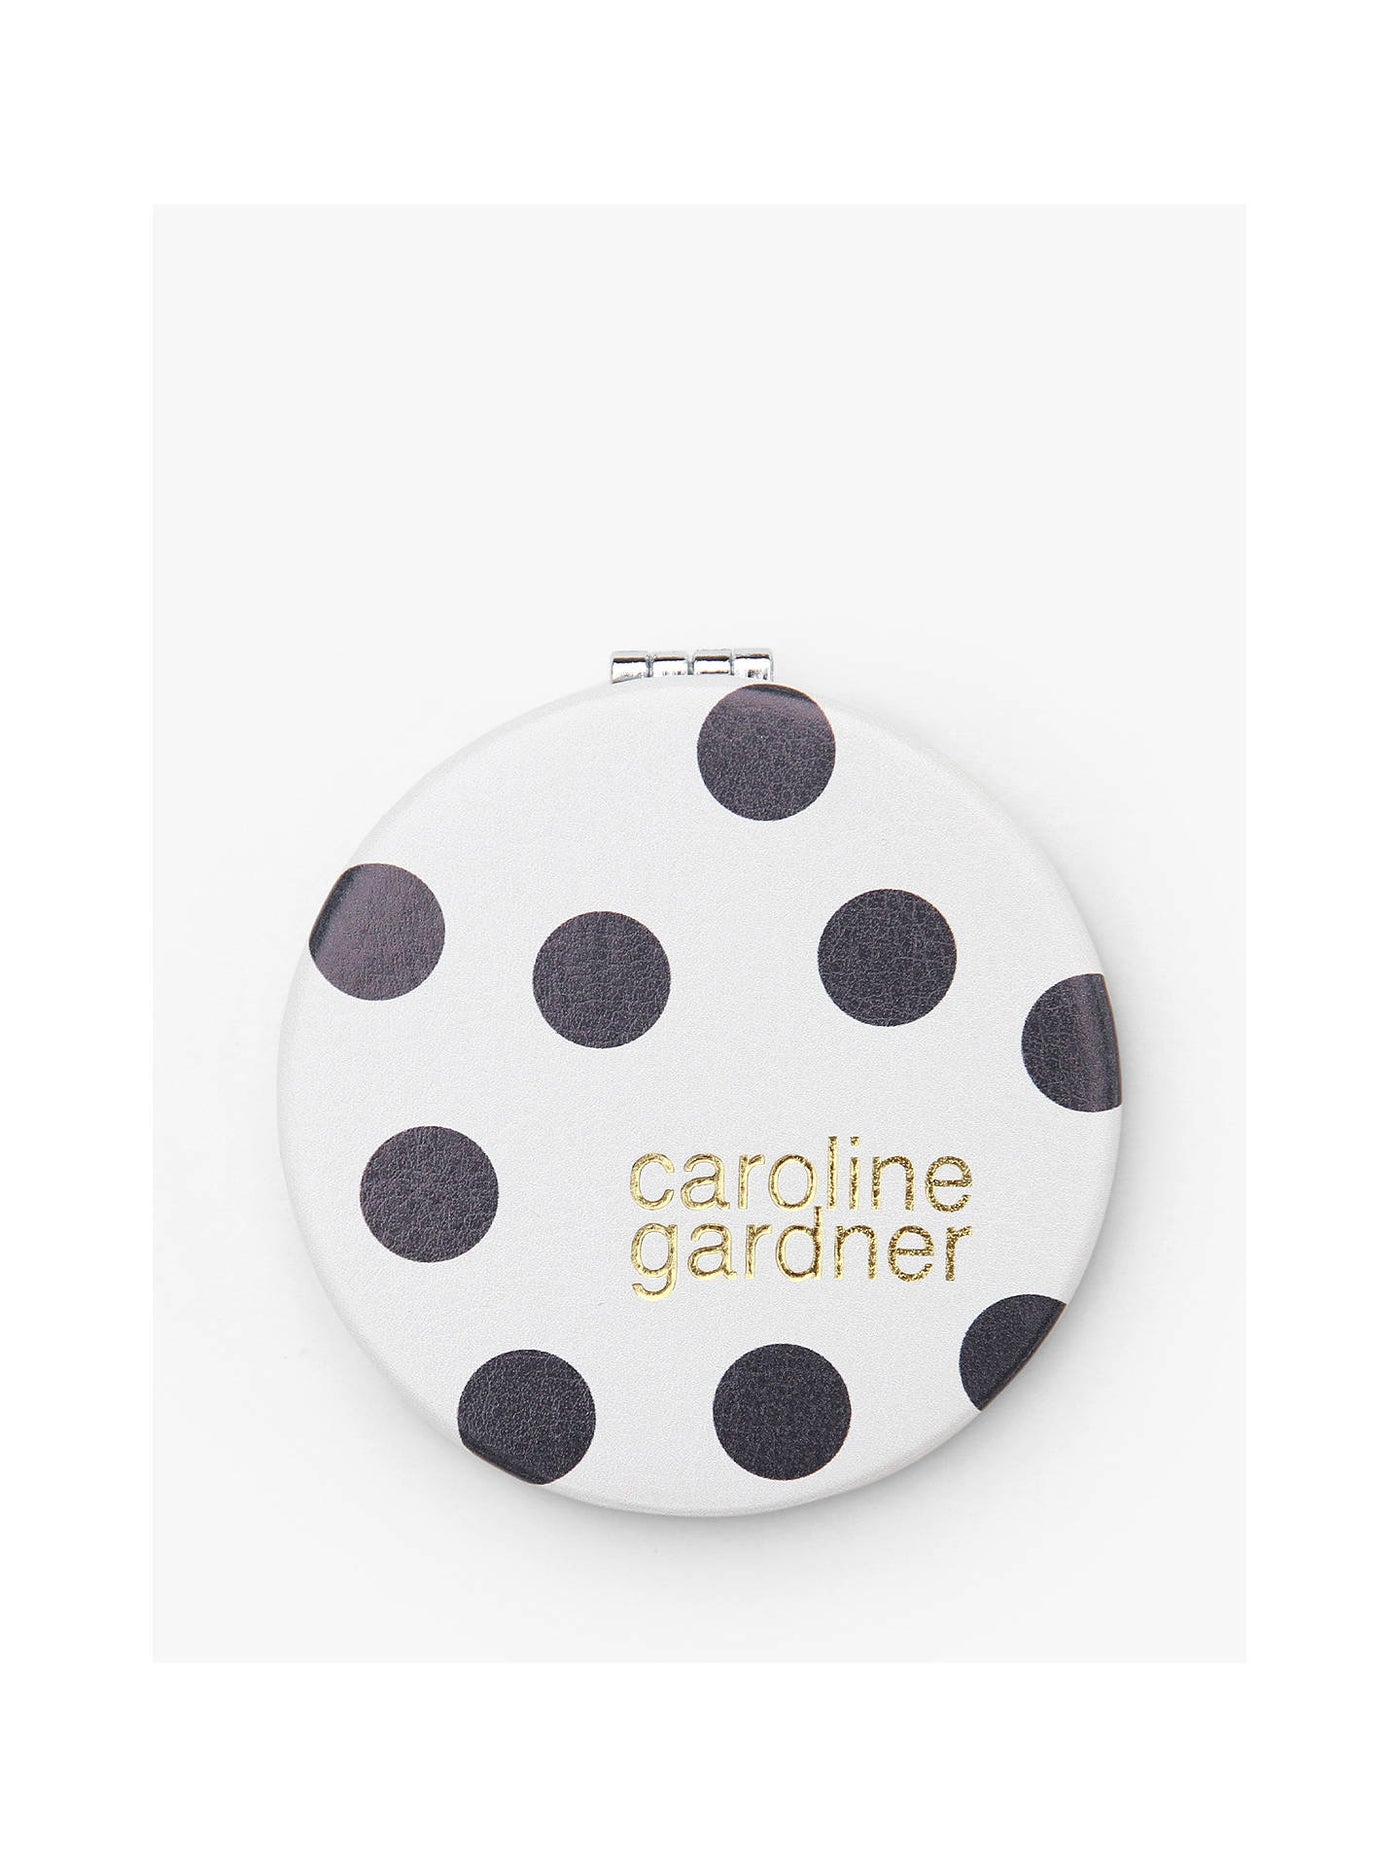 Caroline Gardner Love Scattered Spot Pocket Compact Mirror